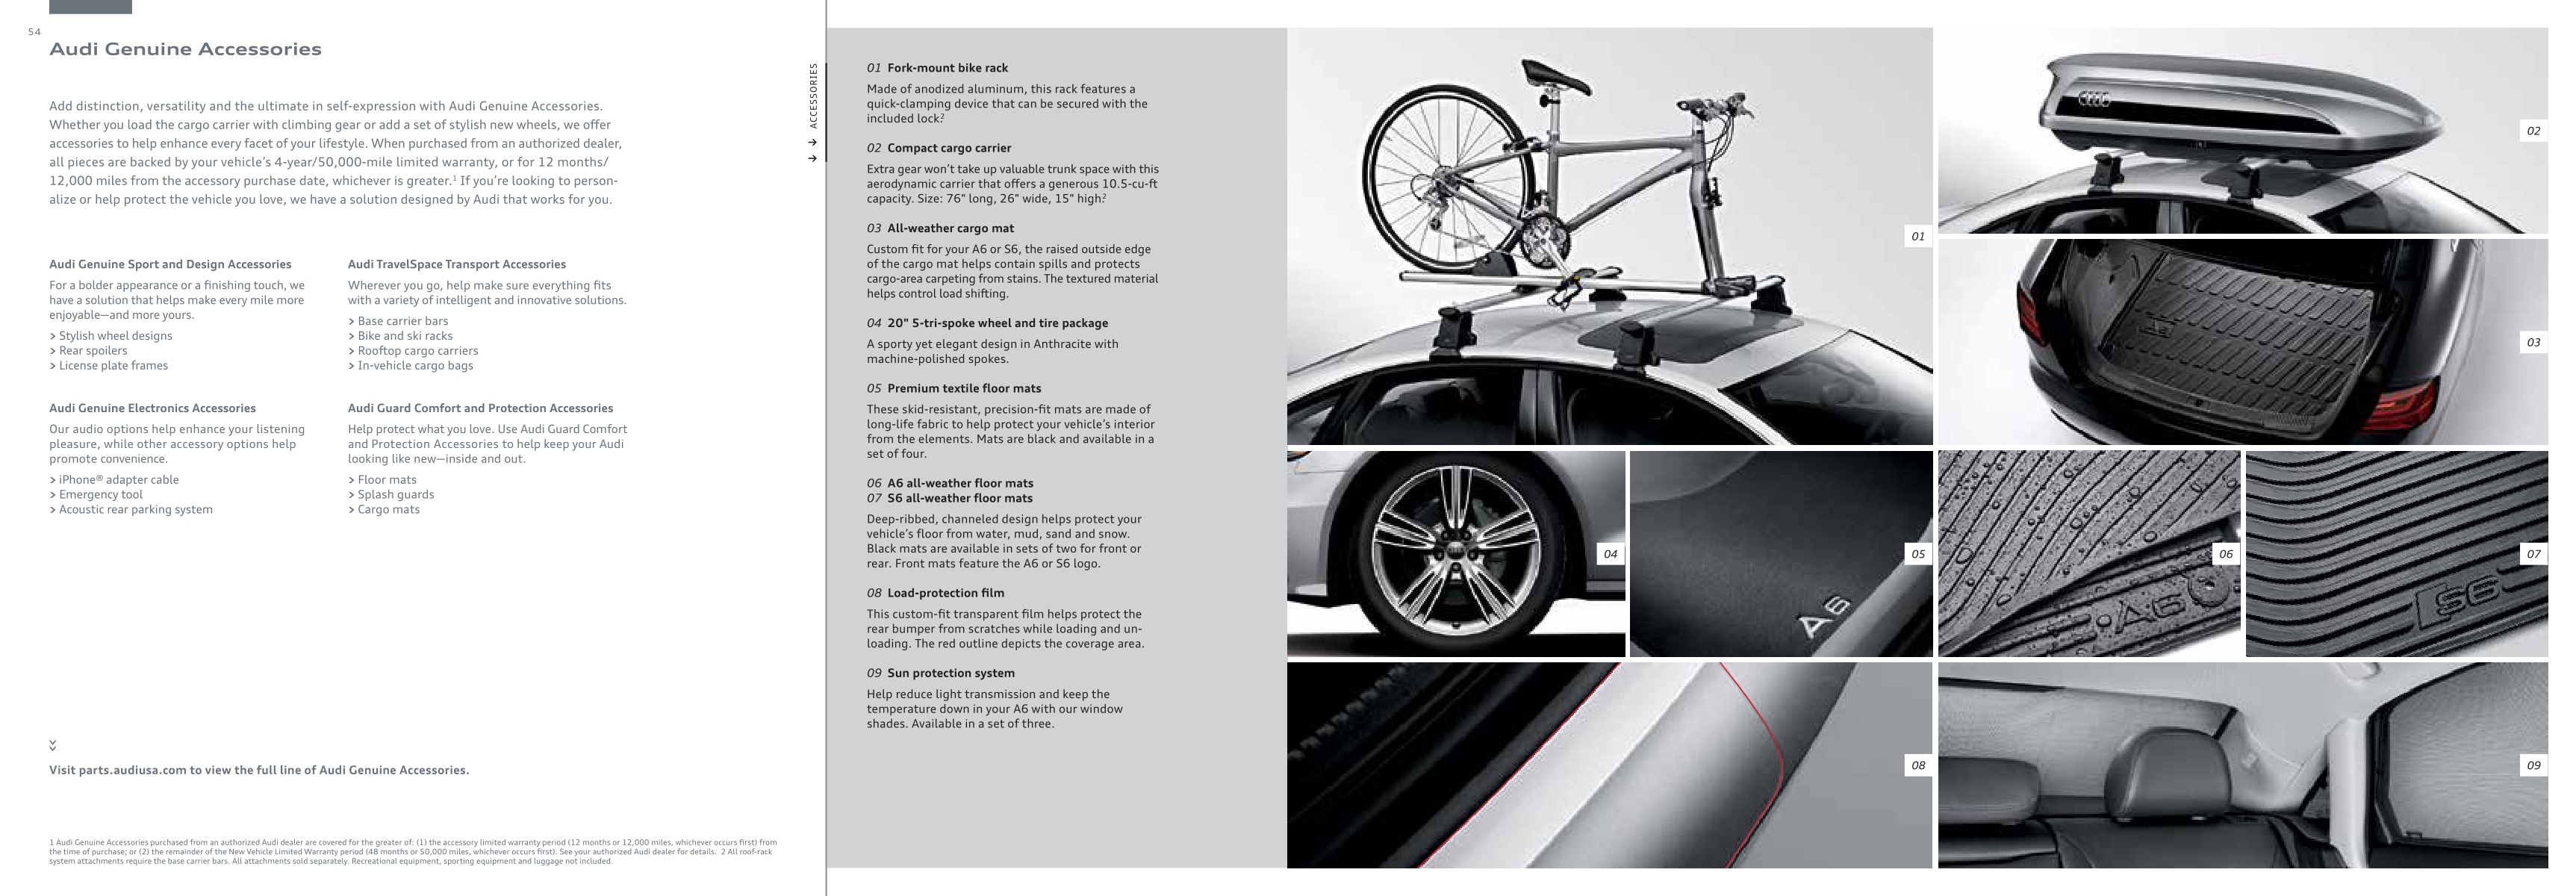 2016 Audi A6 Brochure Page 28